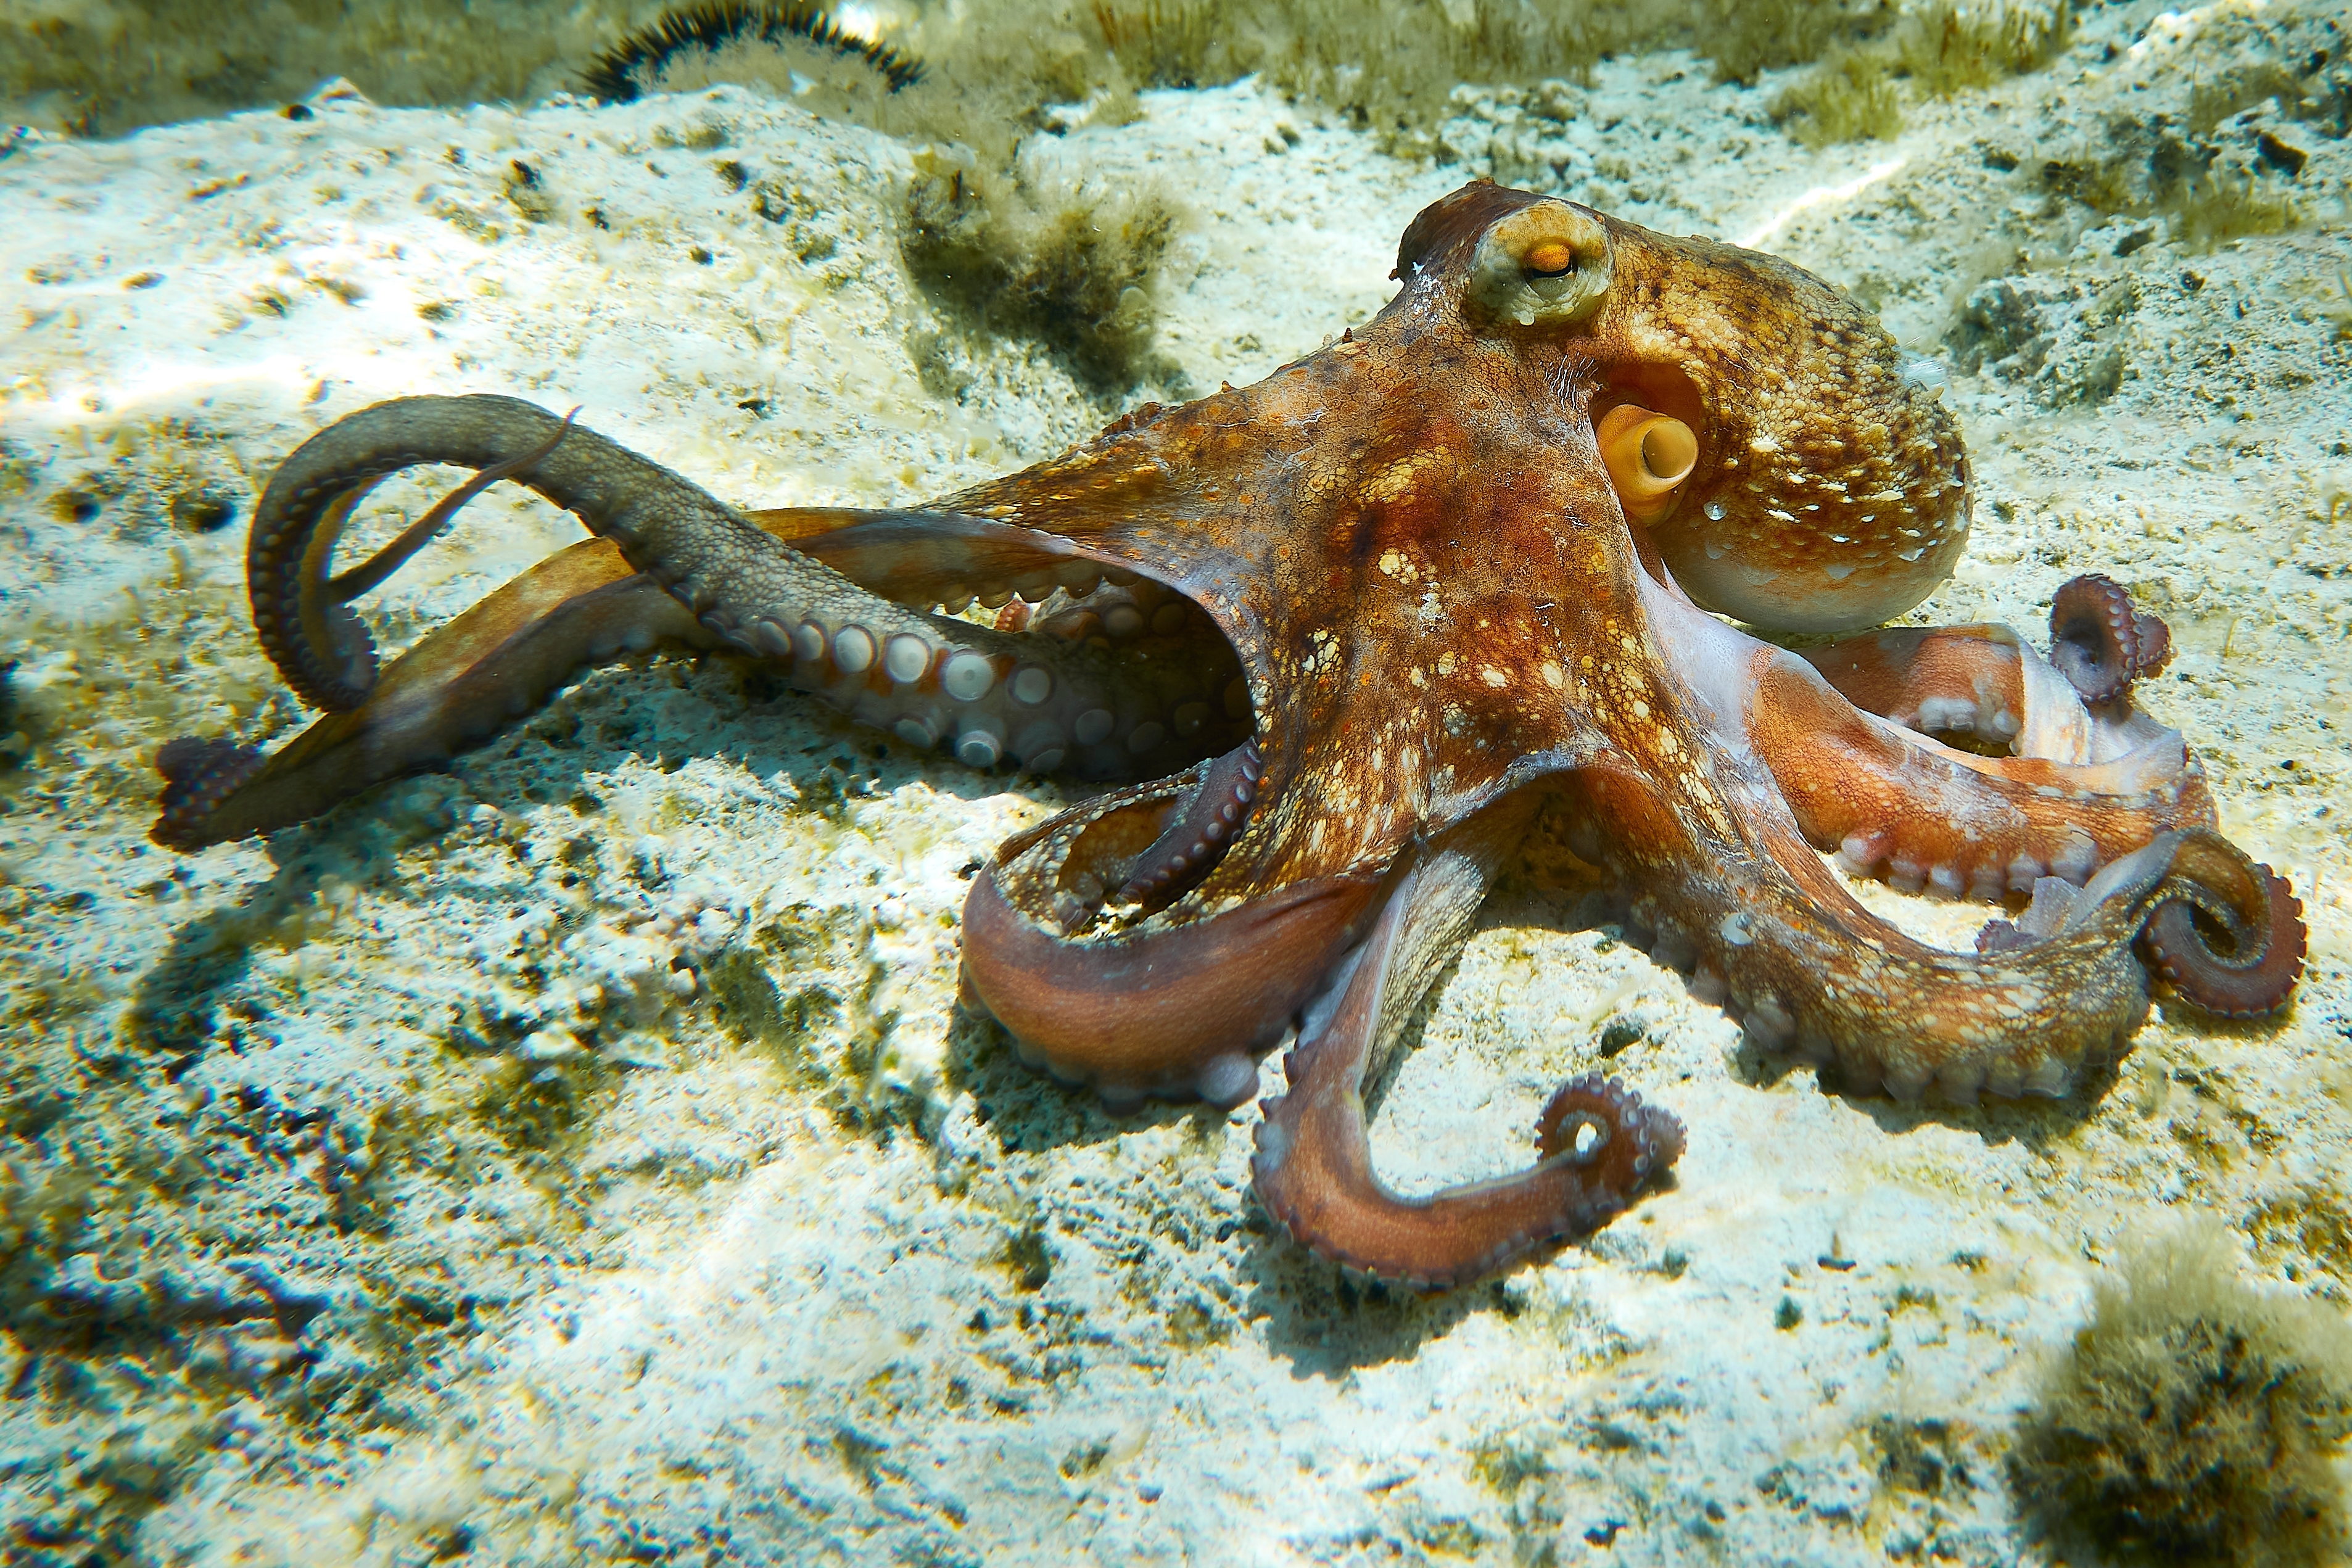 An octopus resting atop the rock | Source: Shutterstock